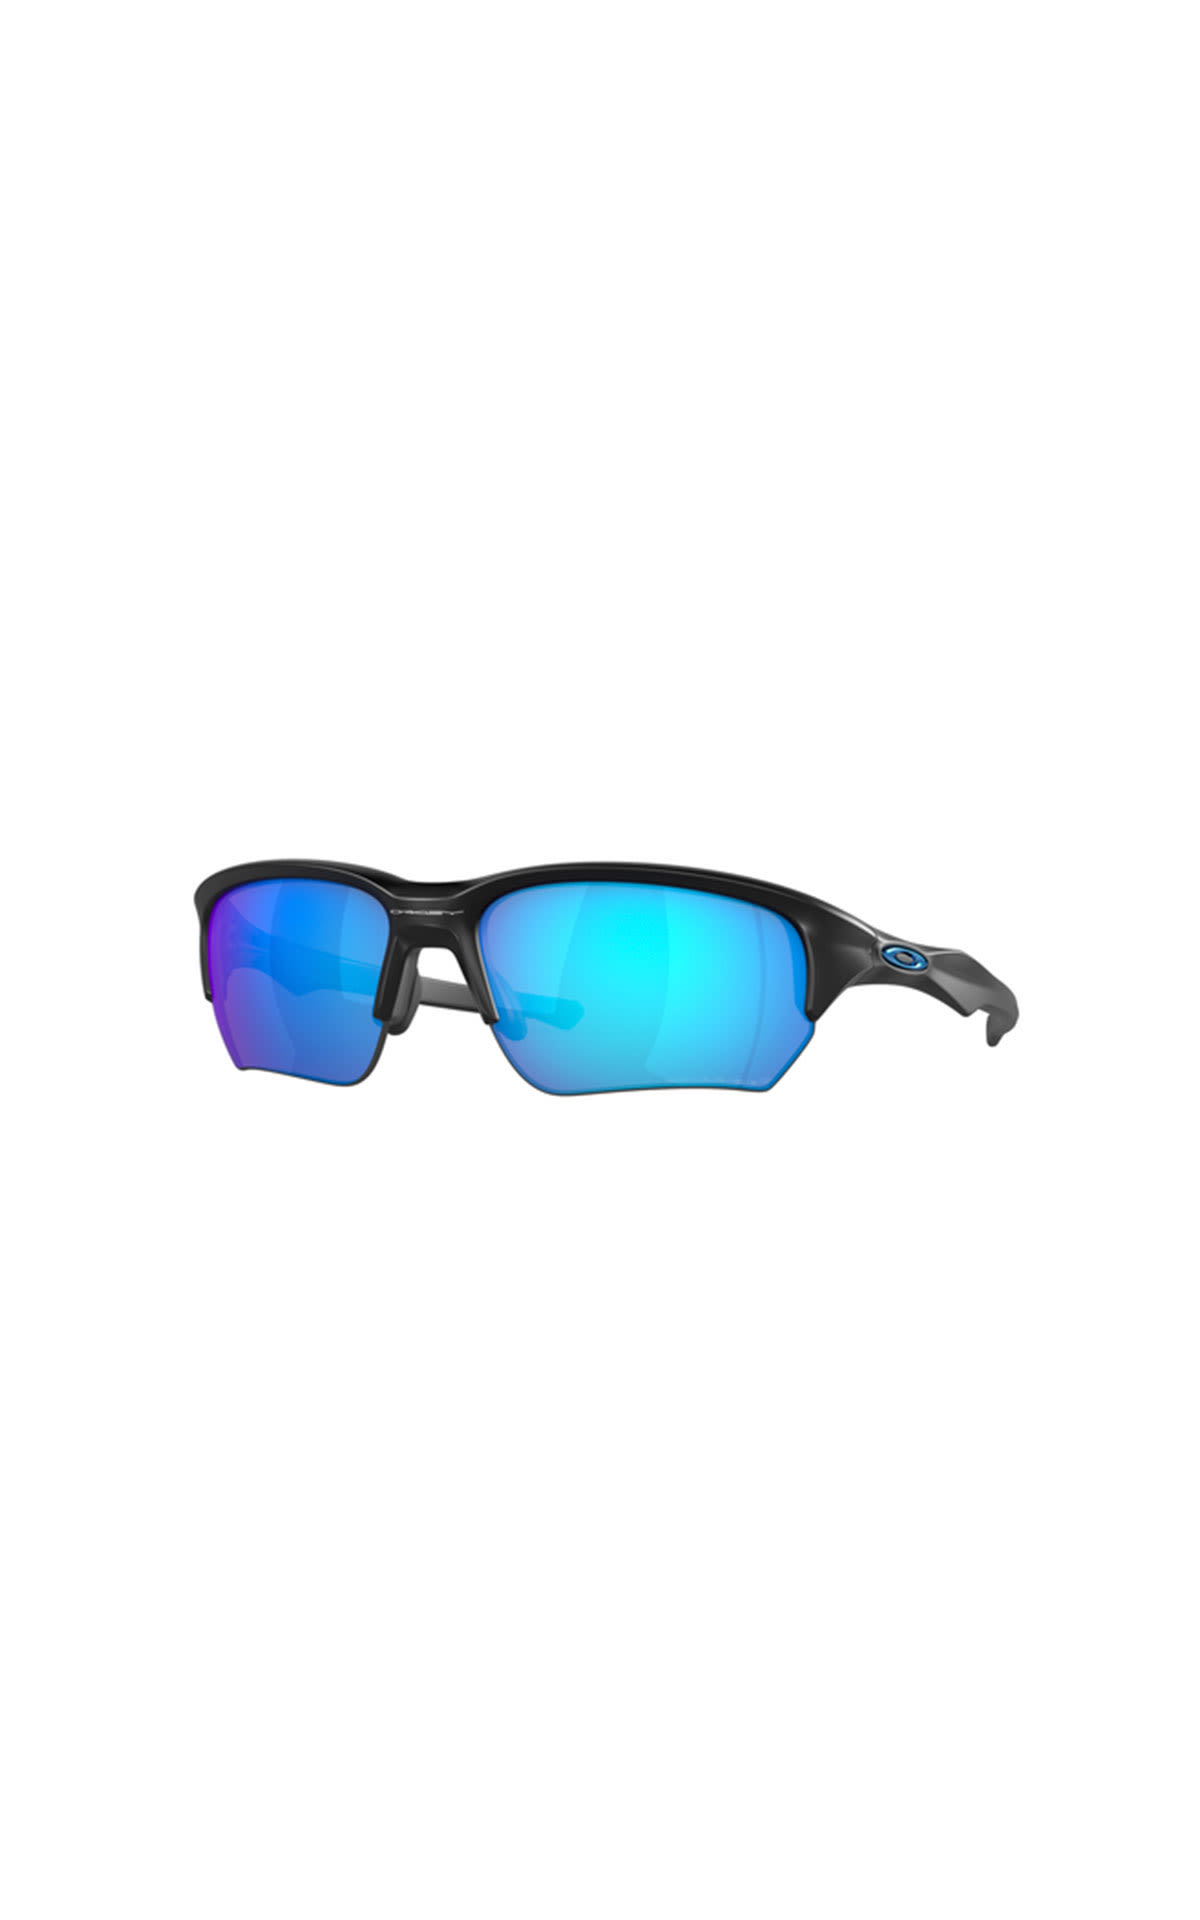 Oakley sunglasses with blue lenses Sunglass Hut